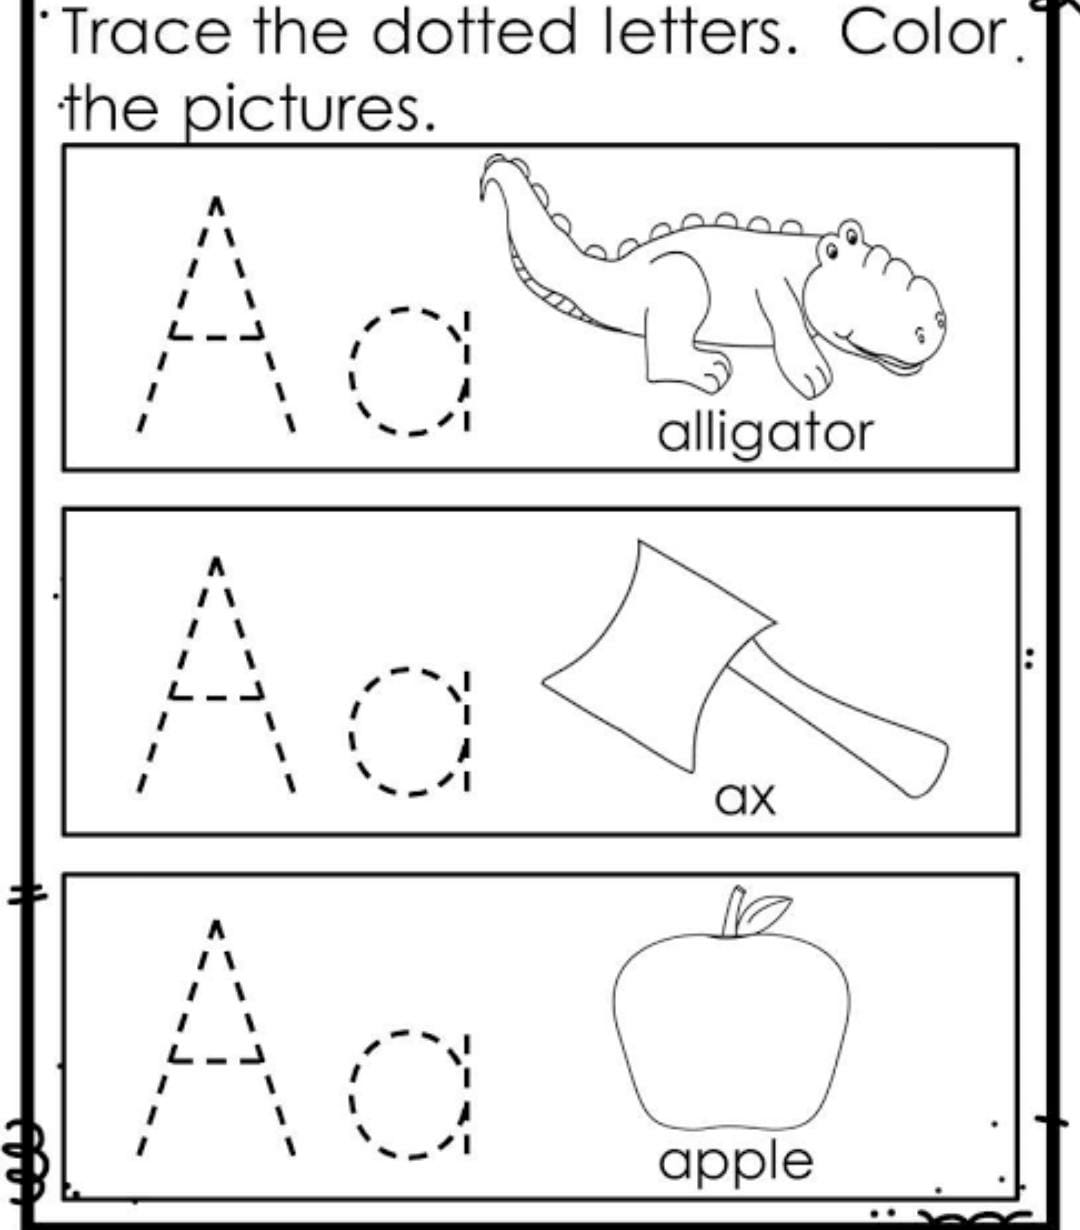 How to teach Alphabet to kids? 9 Practical ideas. - The Educators' Pot